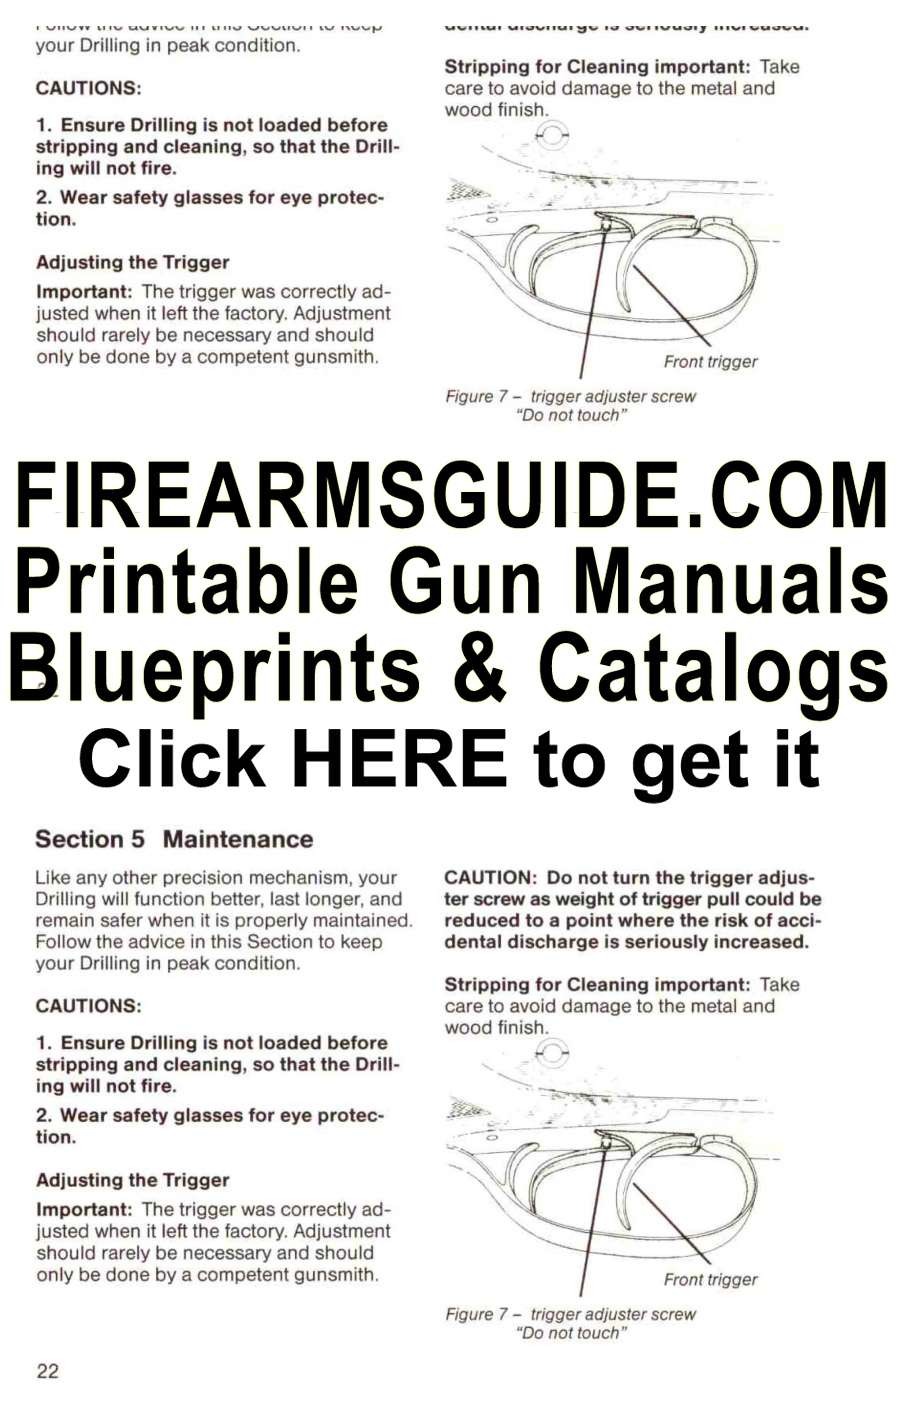 Printable Gun Manuals, Blueprints, Schematics and Guns & Ammo Catalogs